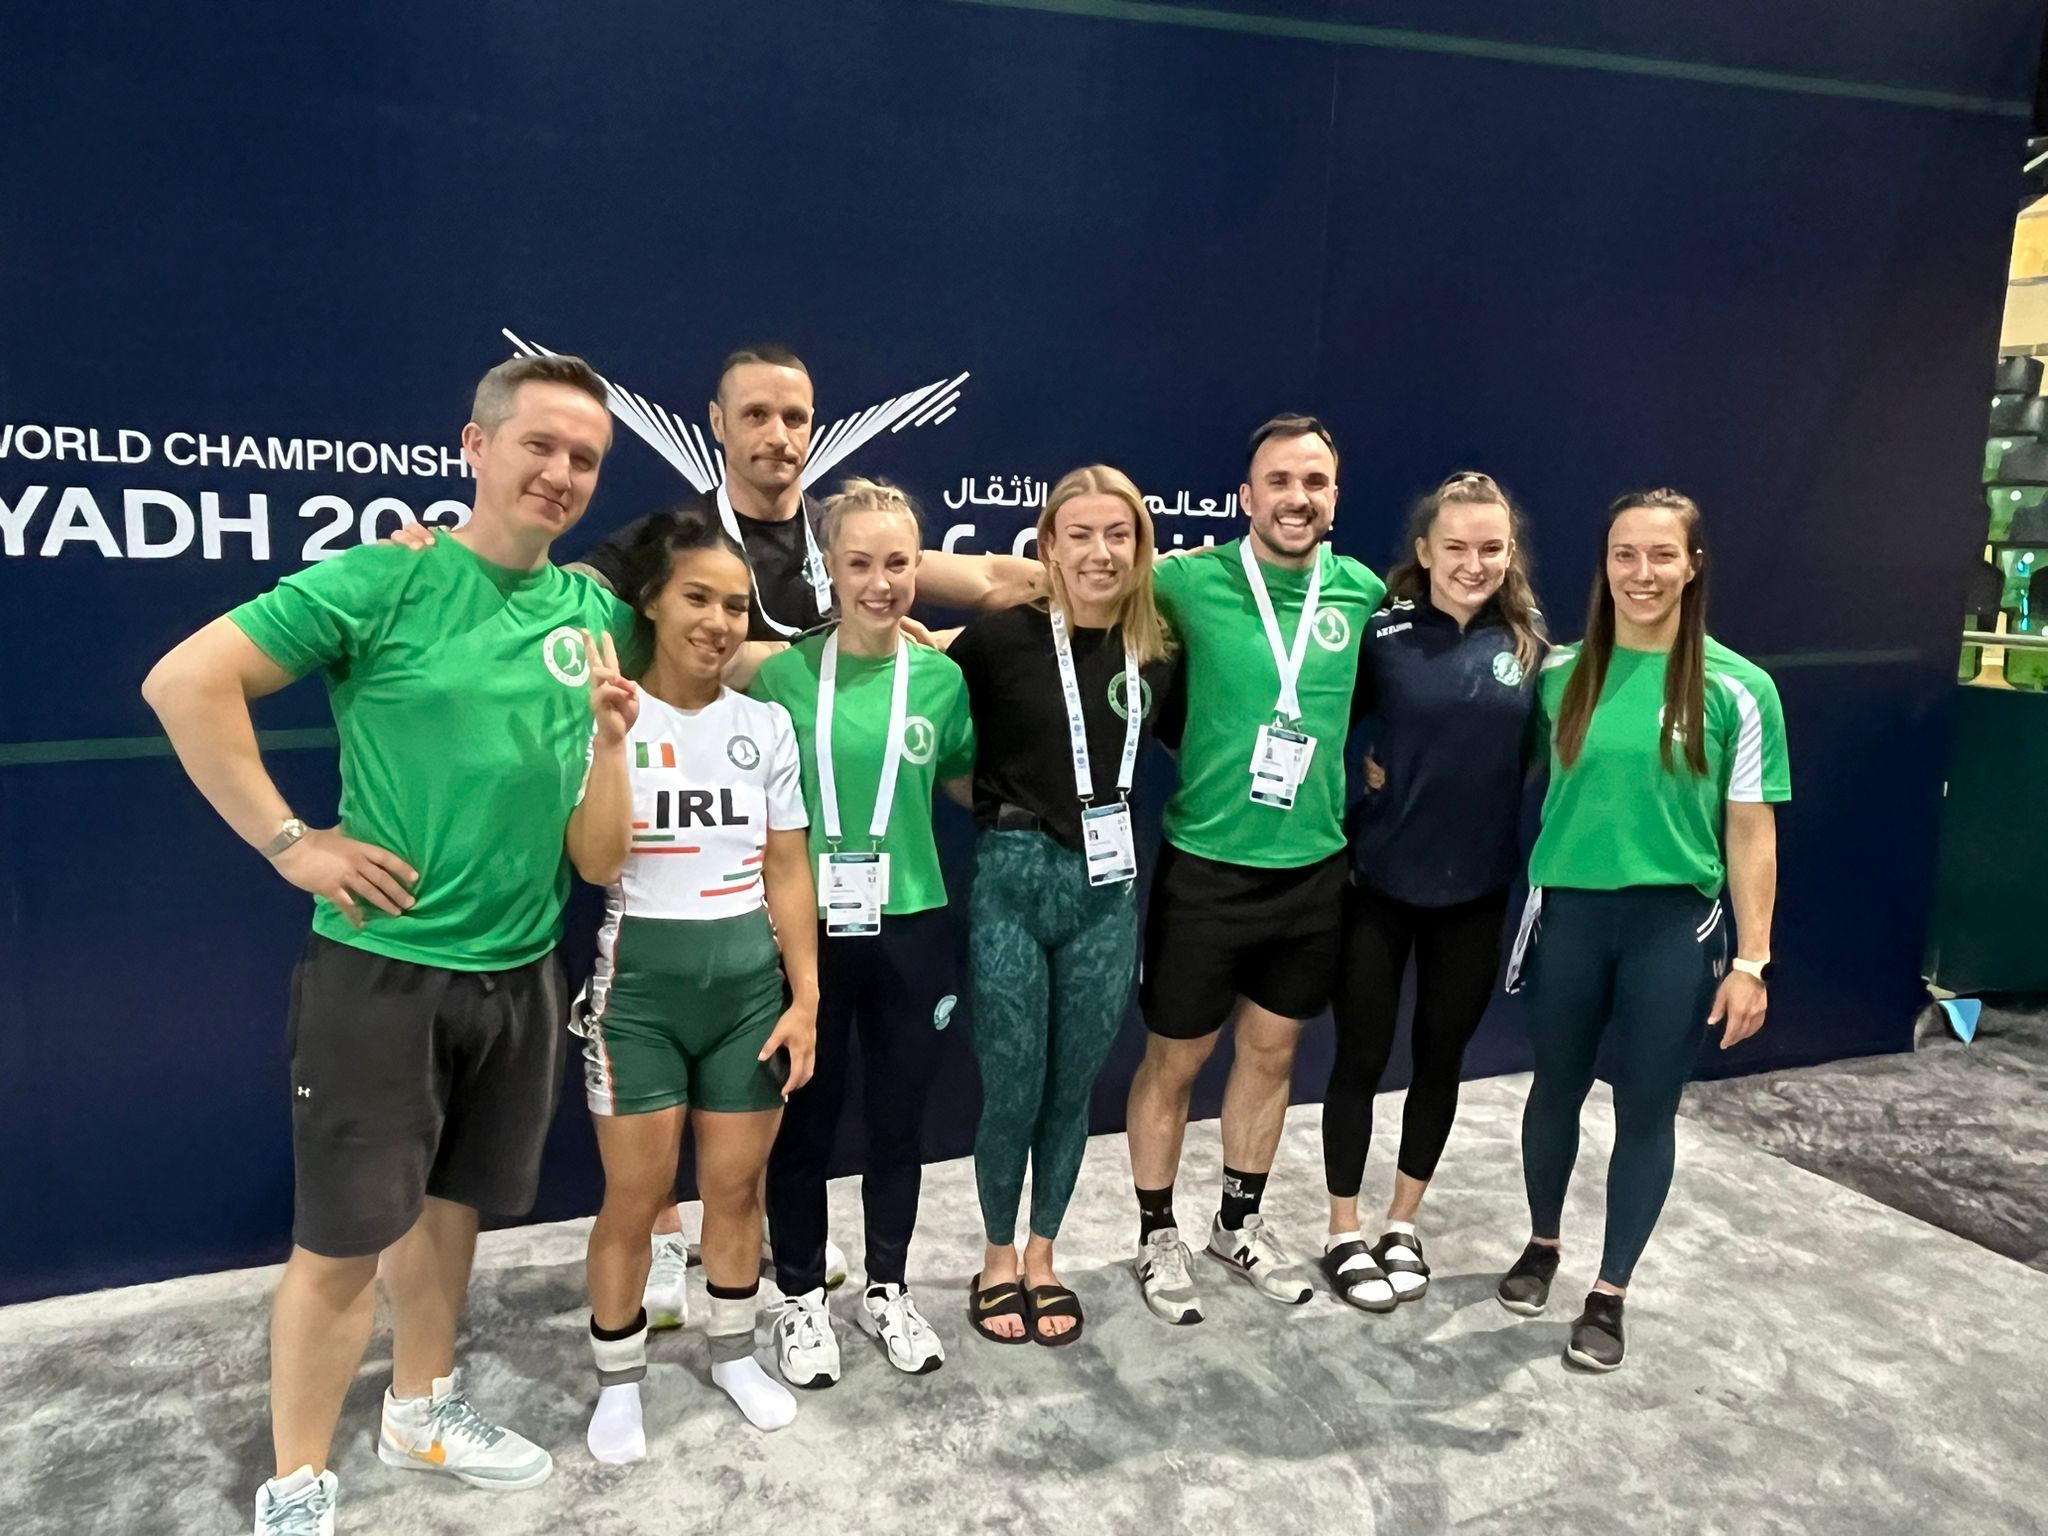 Ireland's delegation at the IWF World Championships in Riyadh ©ITG